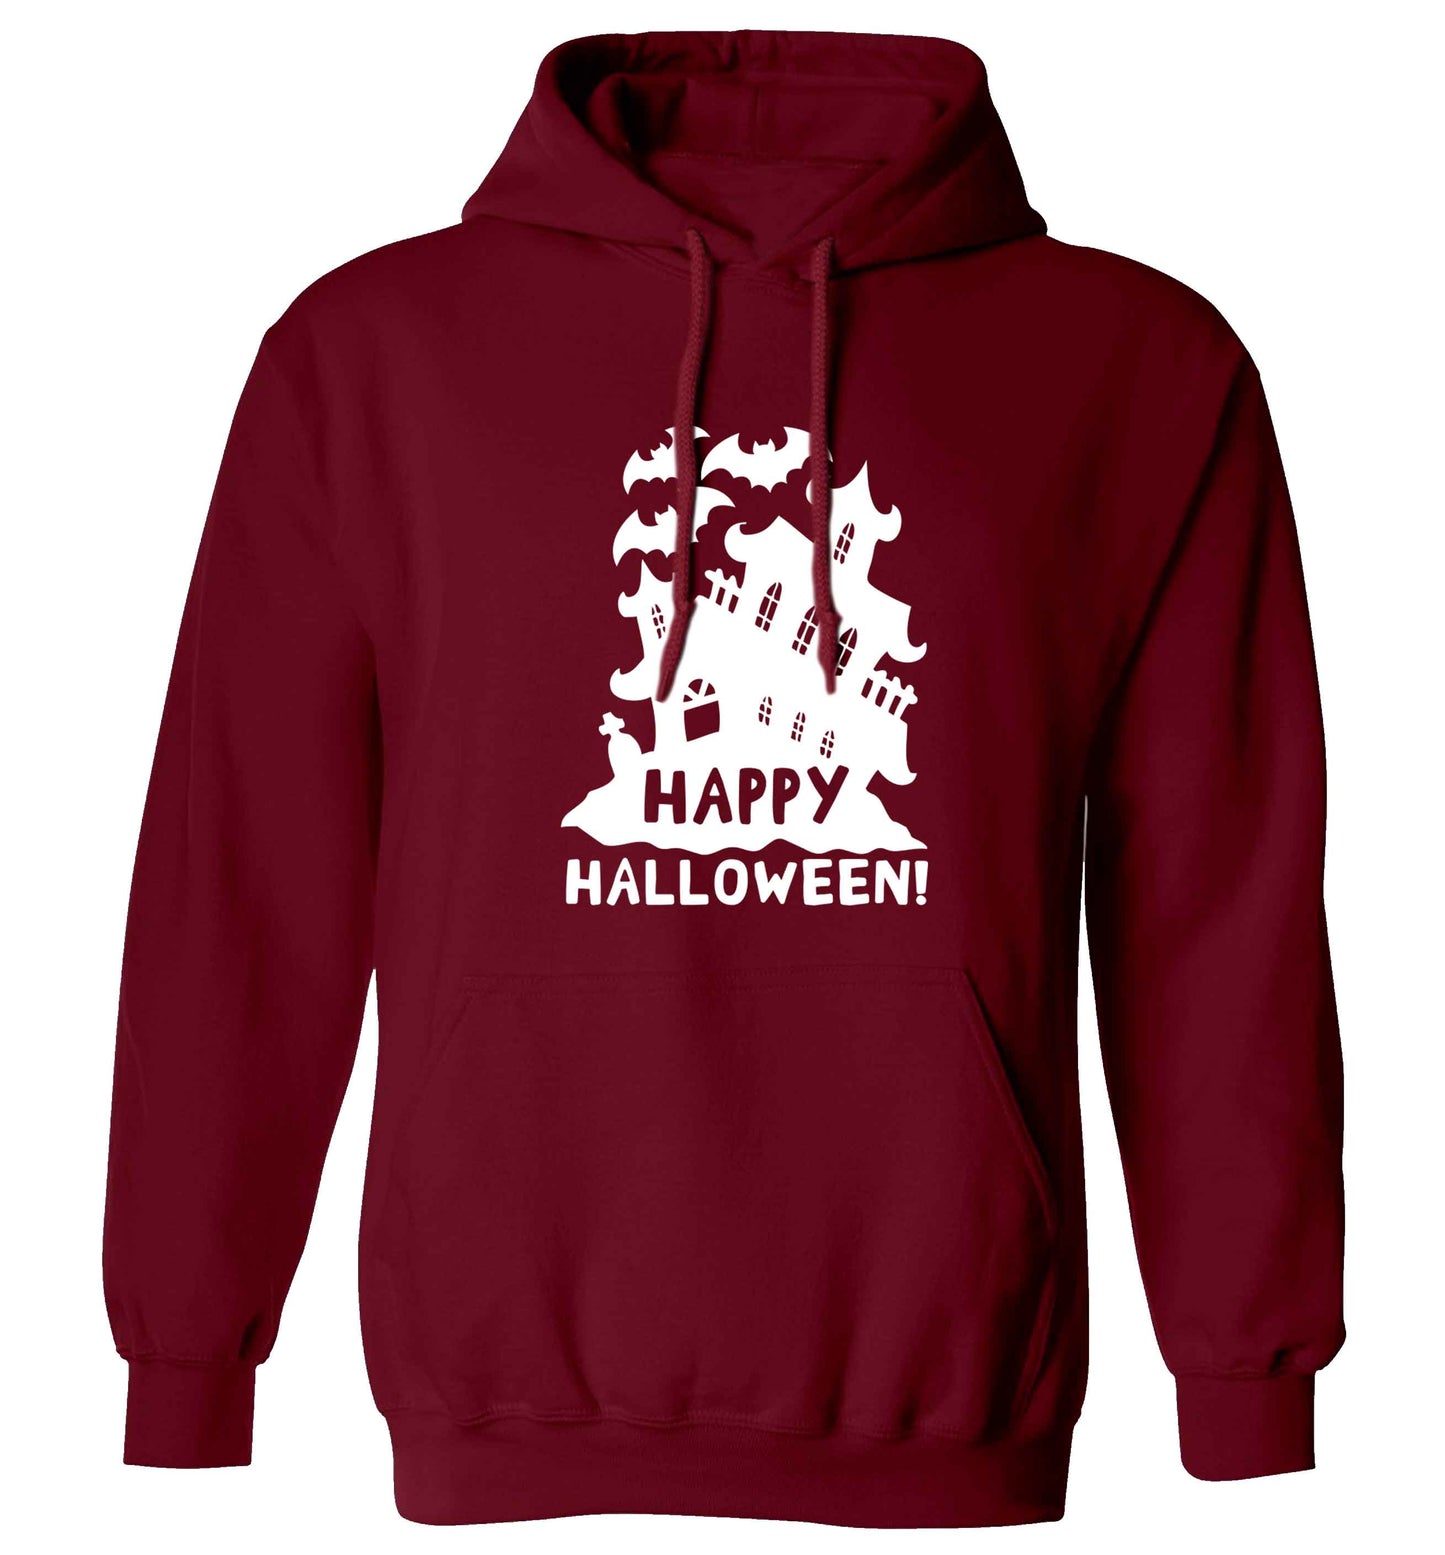 Happy halloween - haunted house adults unisex maroon hoodie 2XL